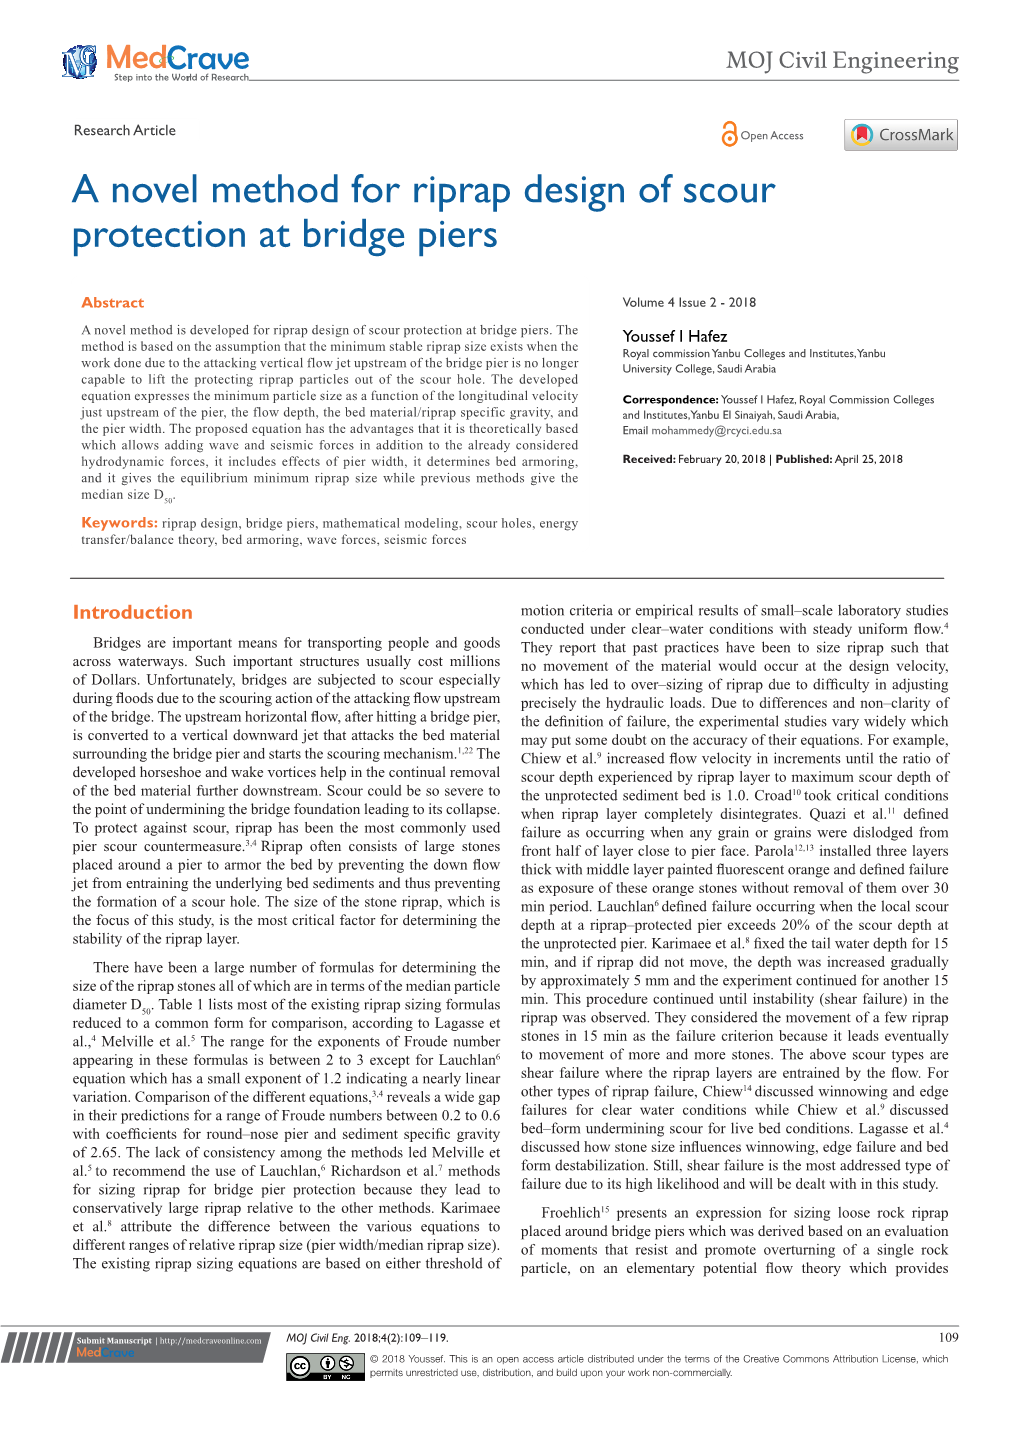 A Novel Method for Riprap Design of Scour Protection at Bridge Piers